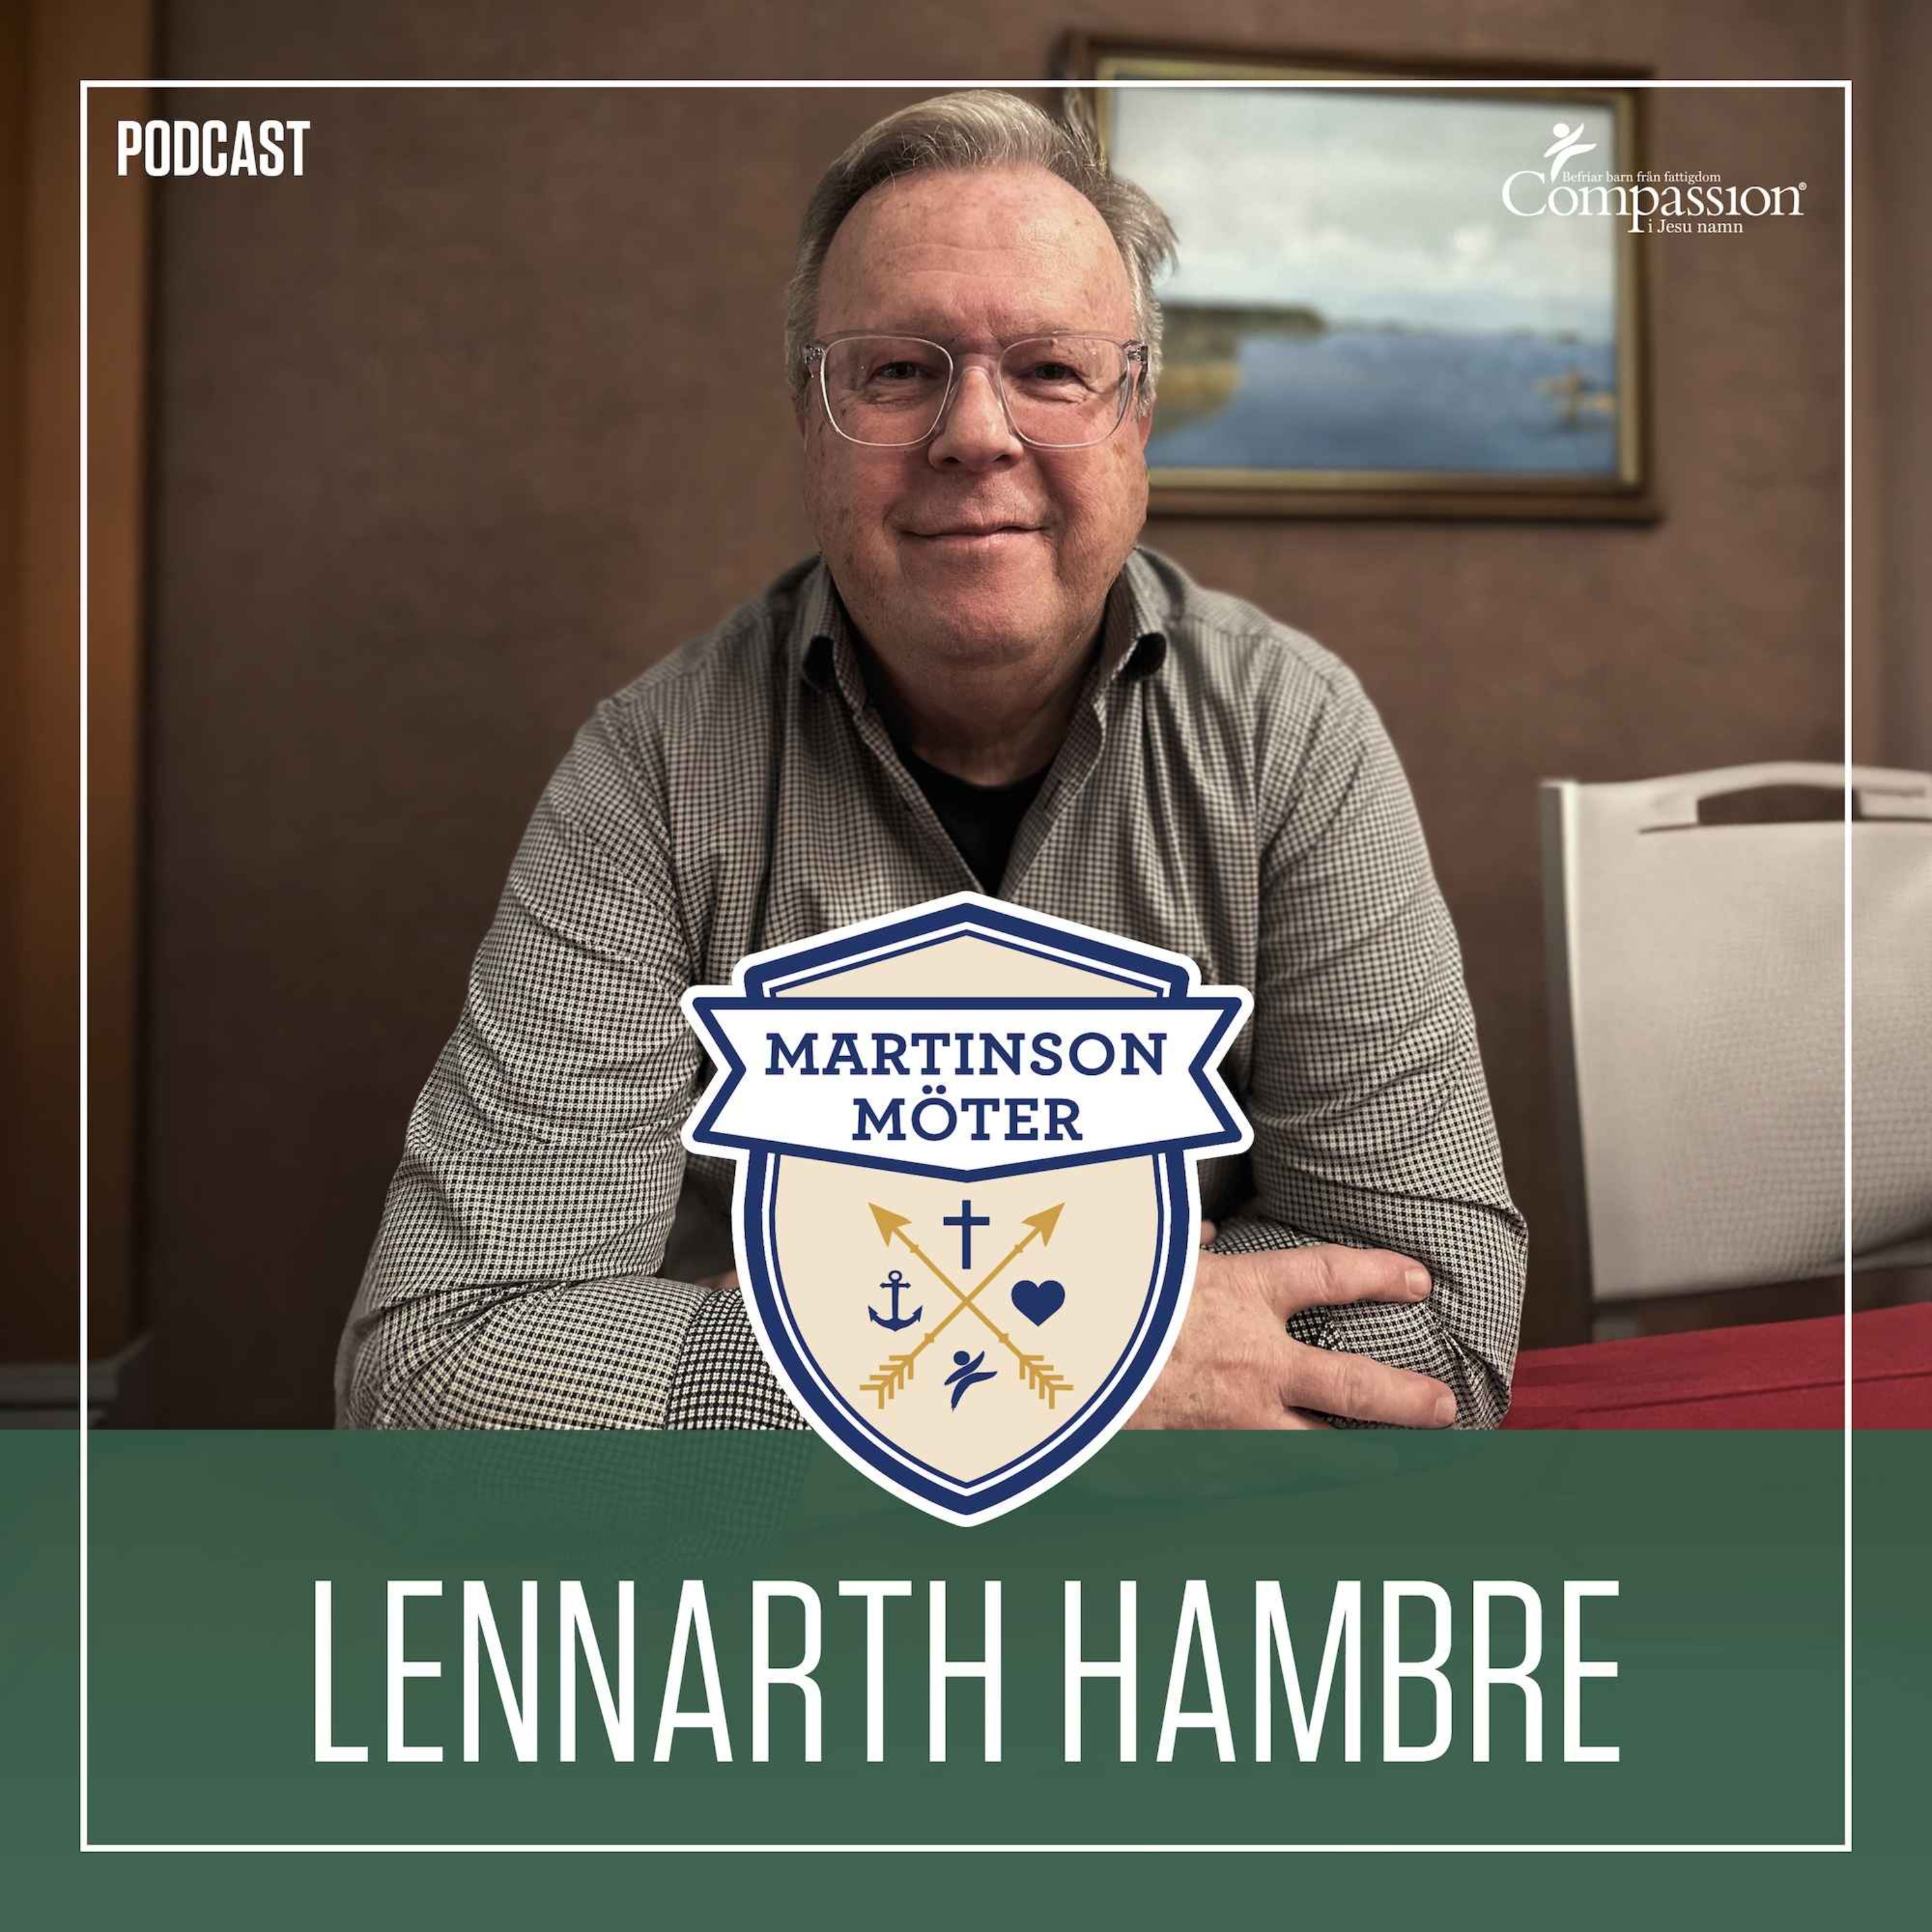 Lennarth Hambre